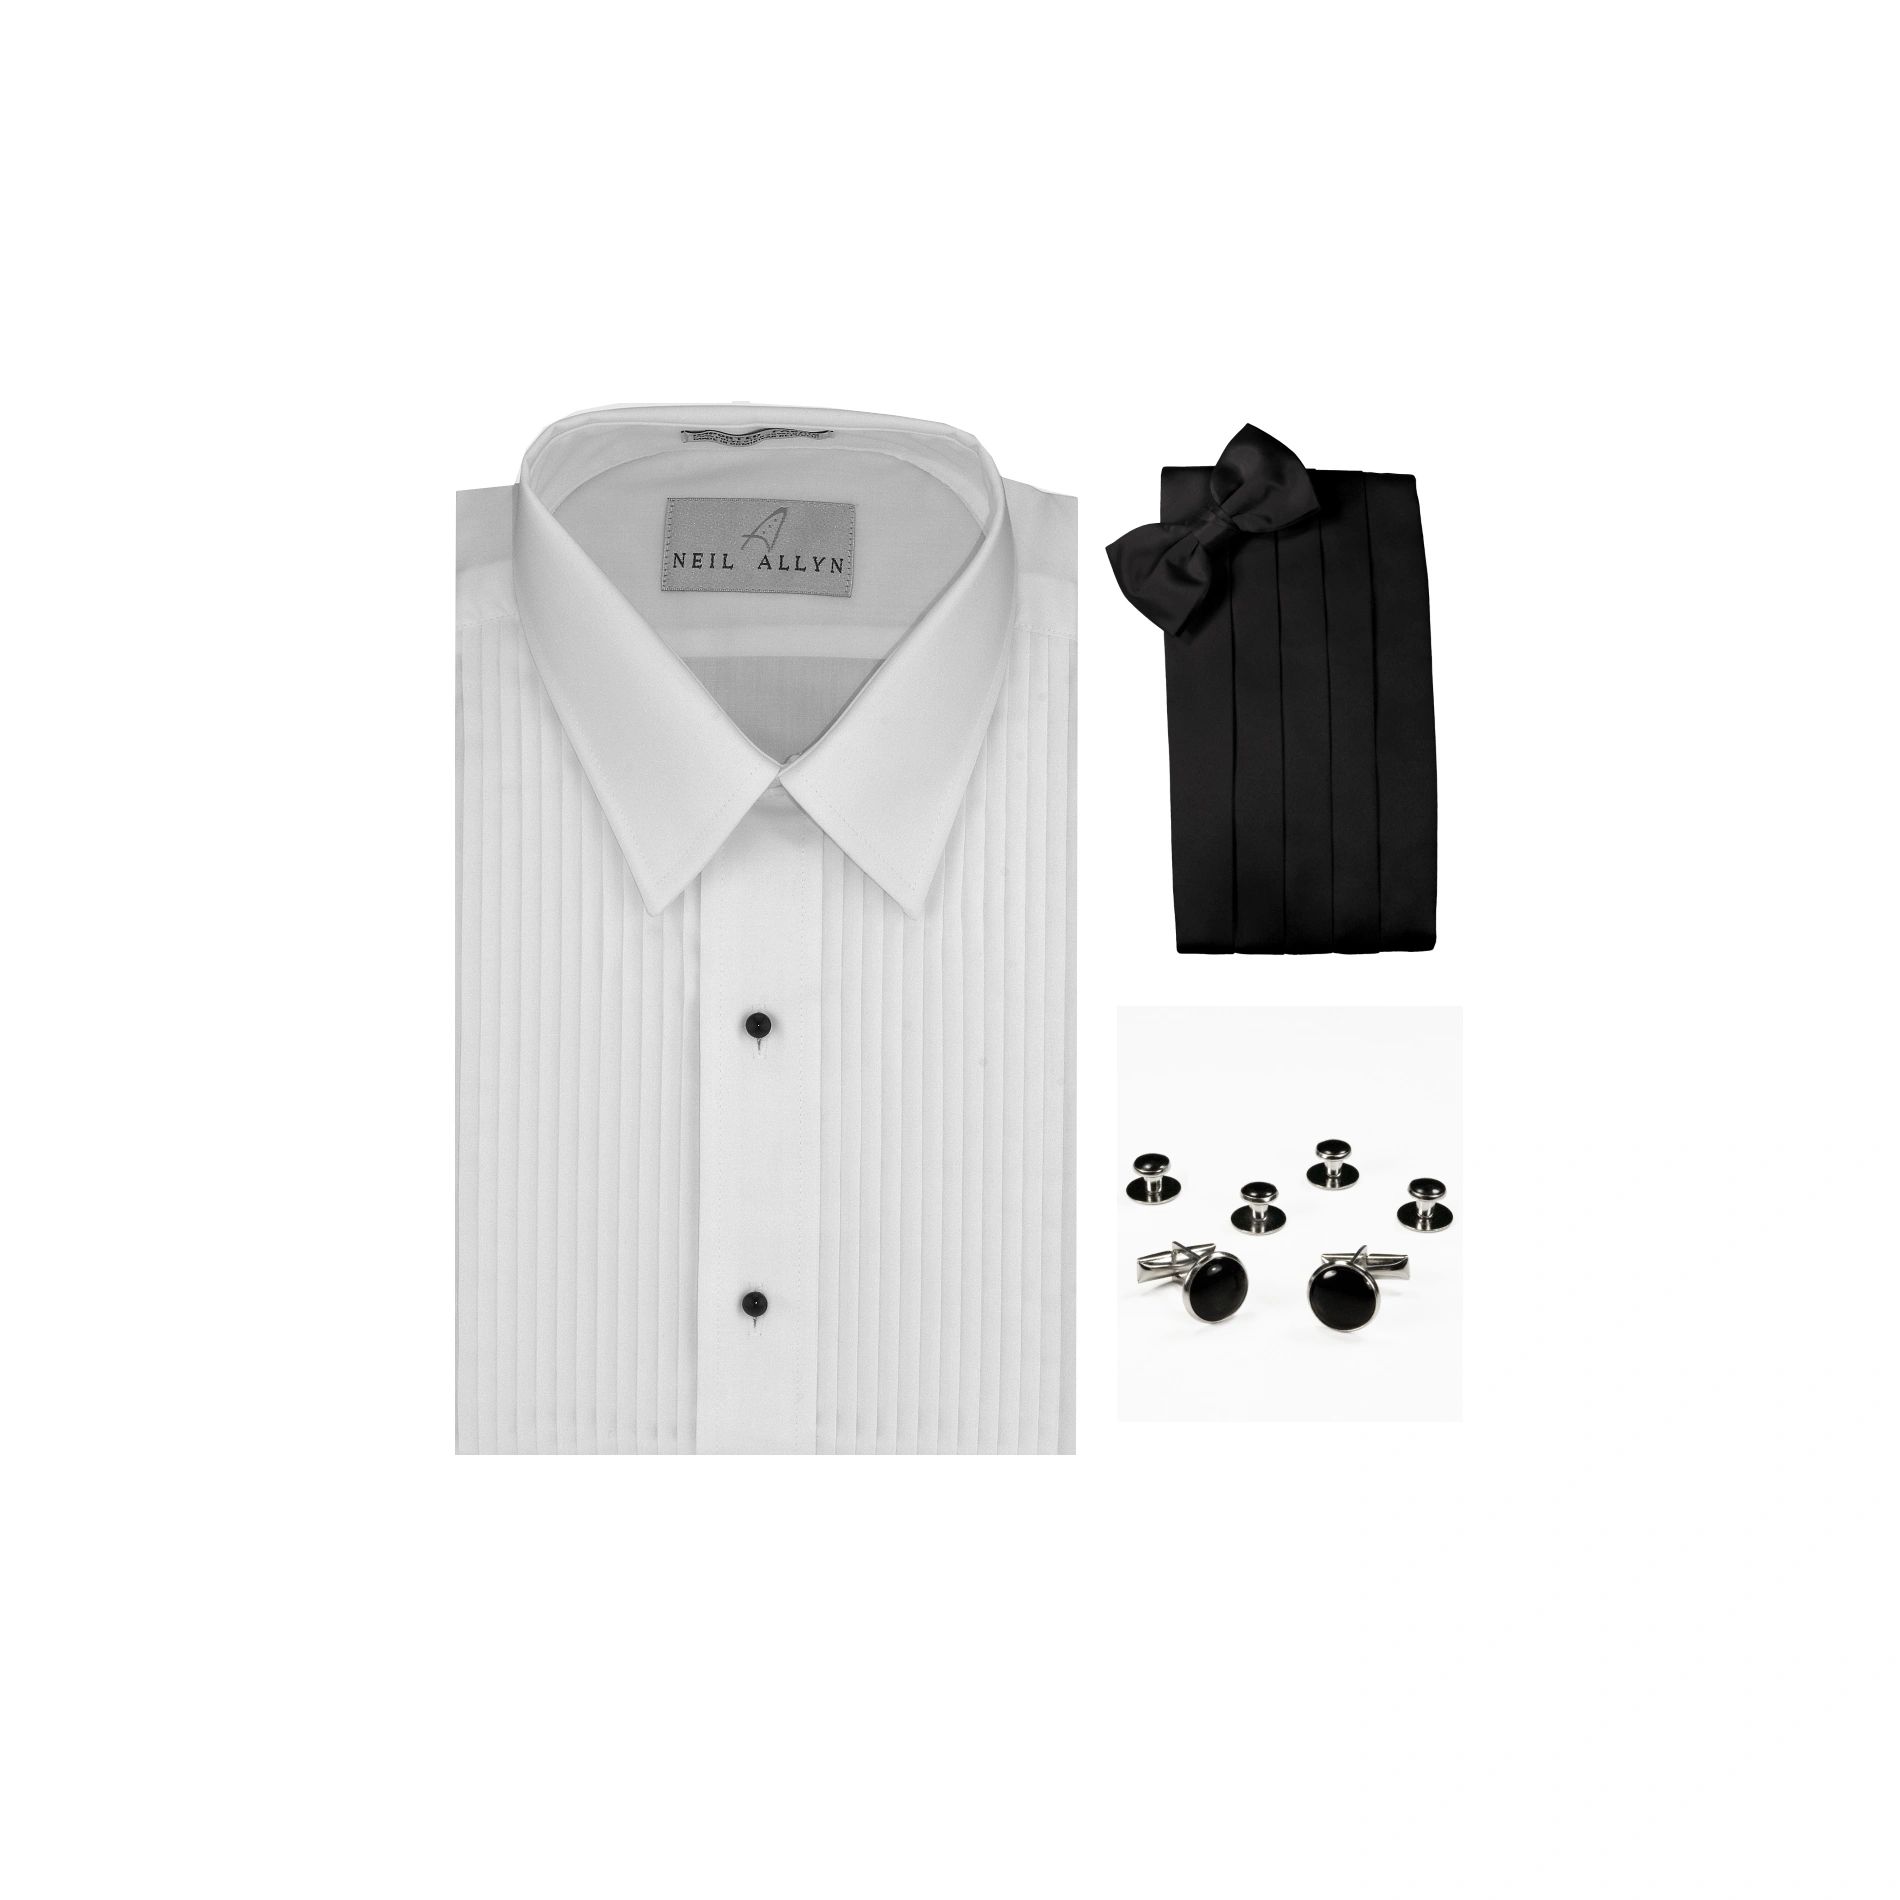 Neil Allyn FITTED Lay-Down Collar 1/4" Pleats Formal Tuxedo Shirt, Cummerbund, Bow-Tie, Cuff Links & Studs Set